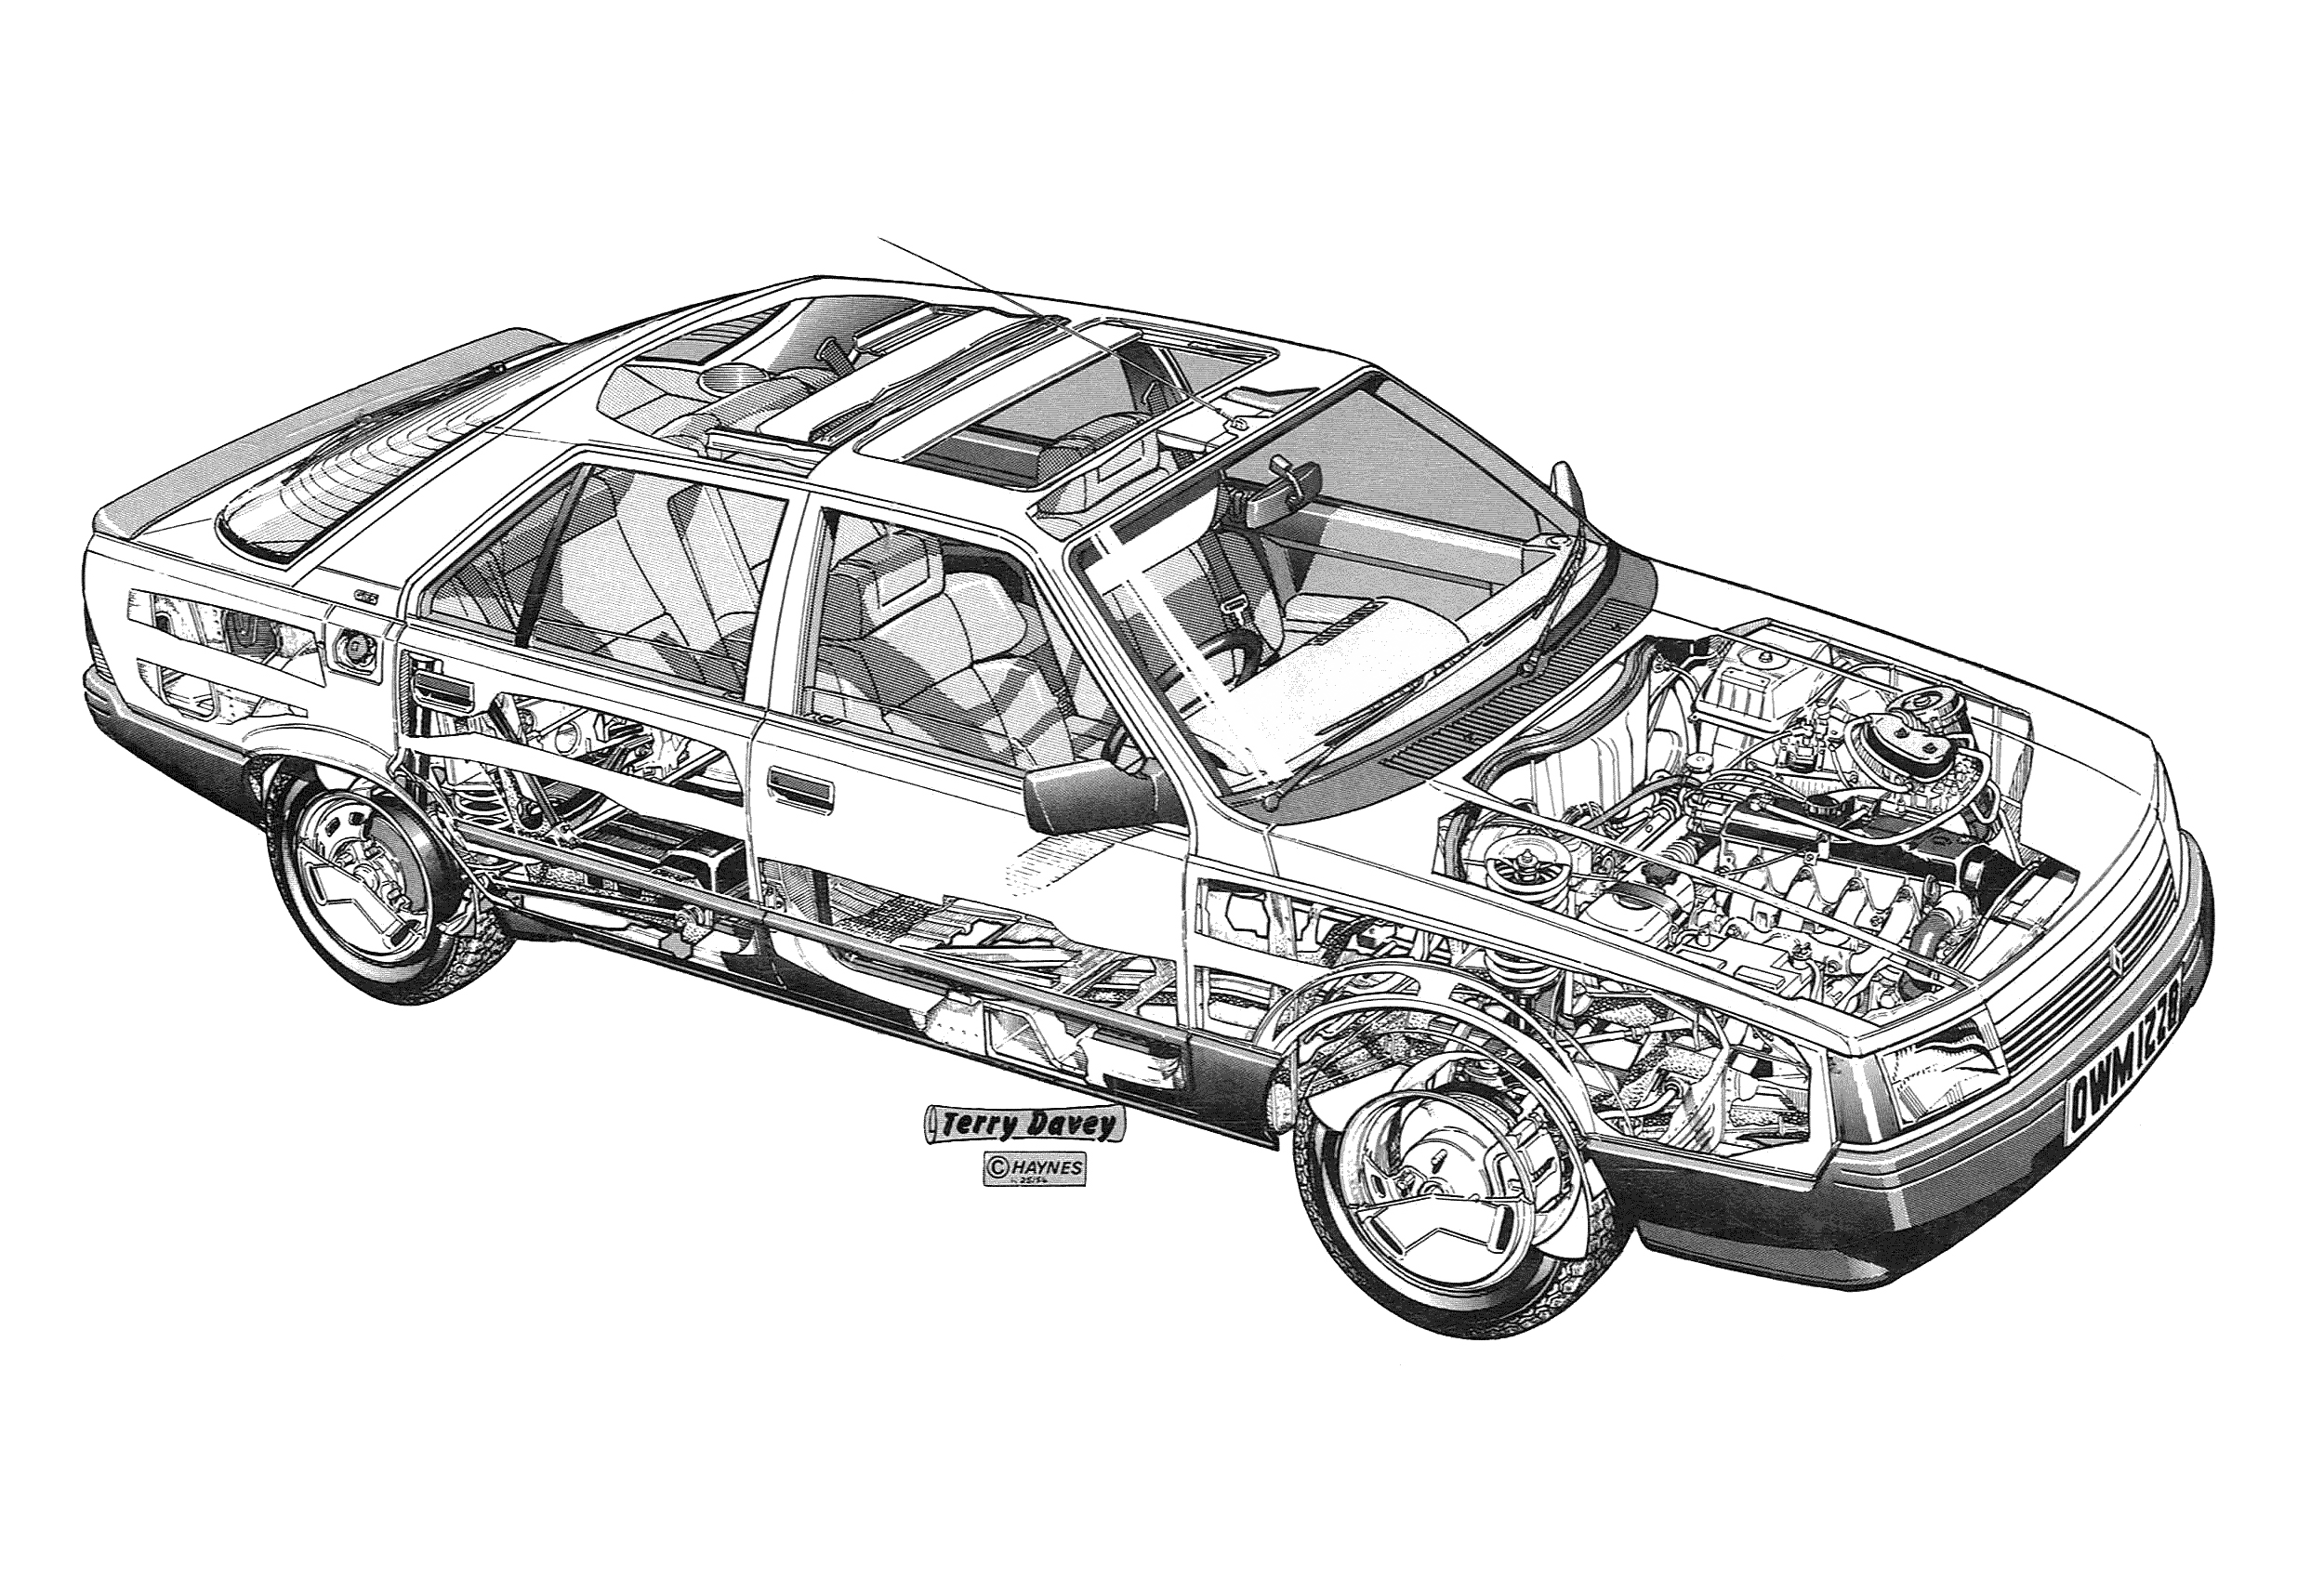 Renault 25 GTS cutaway drawing